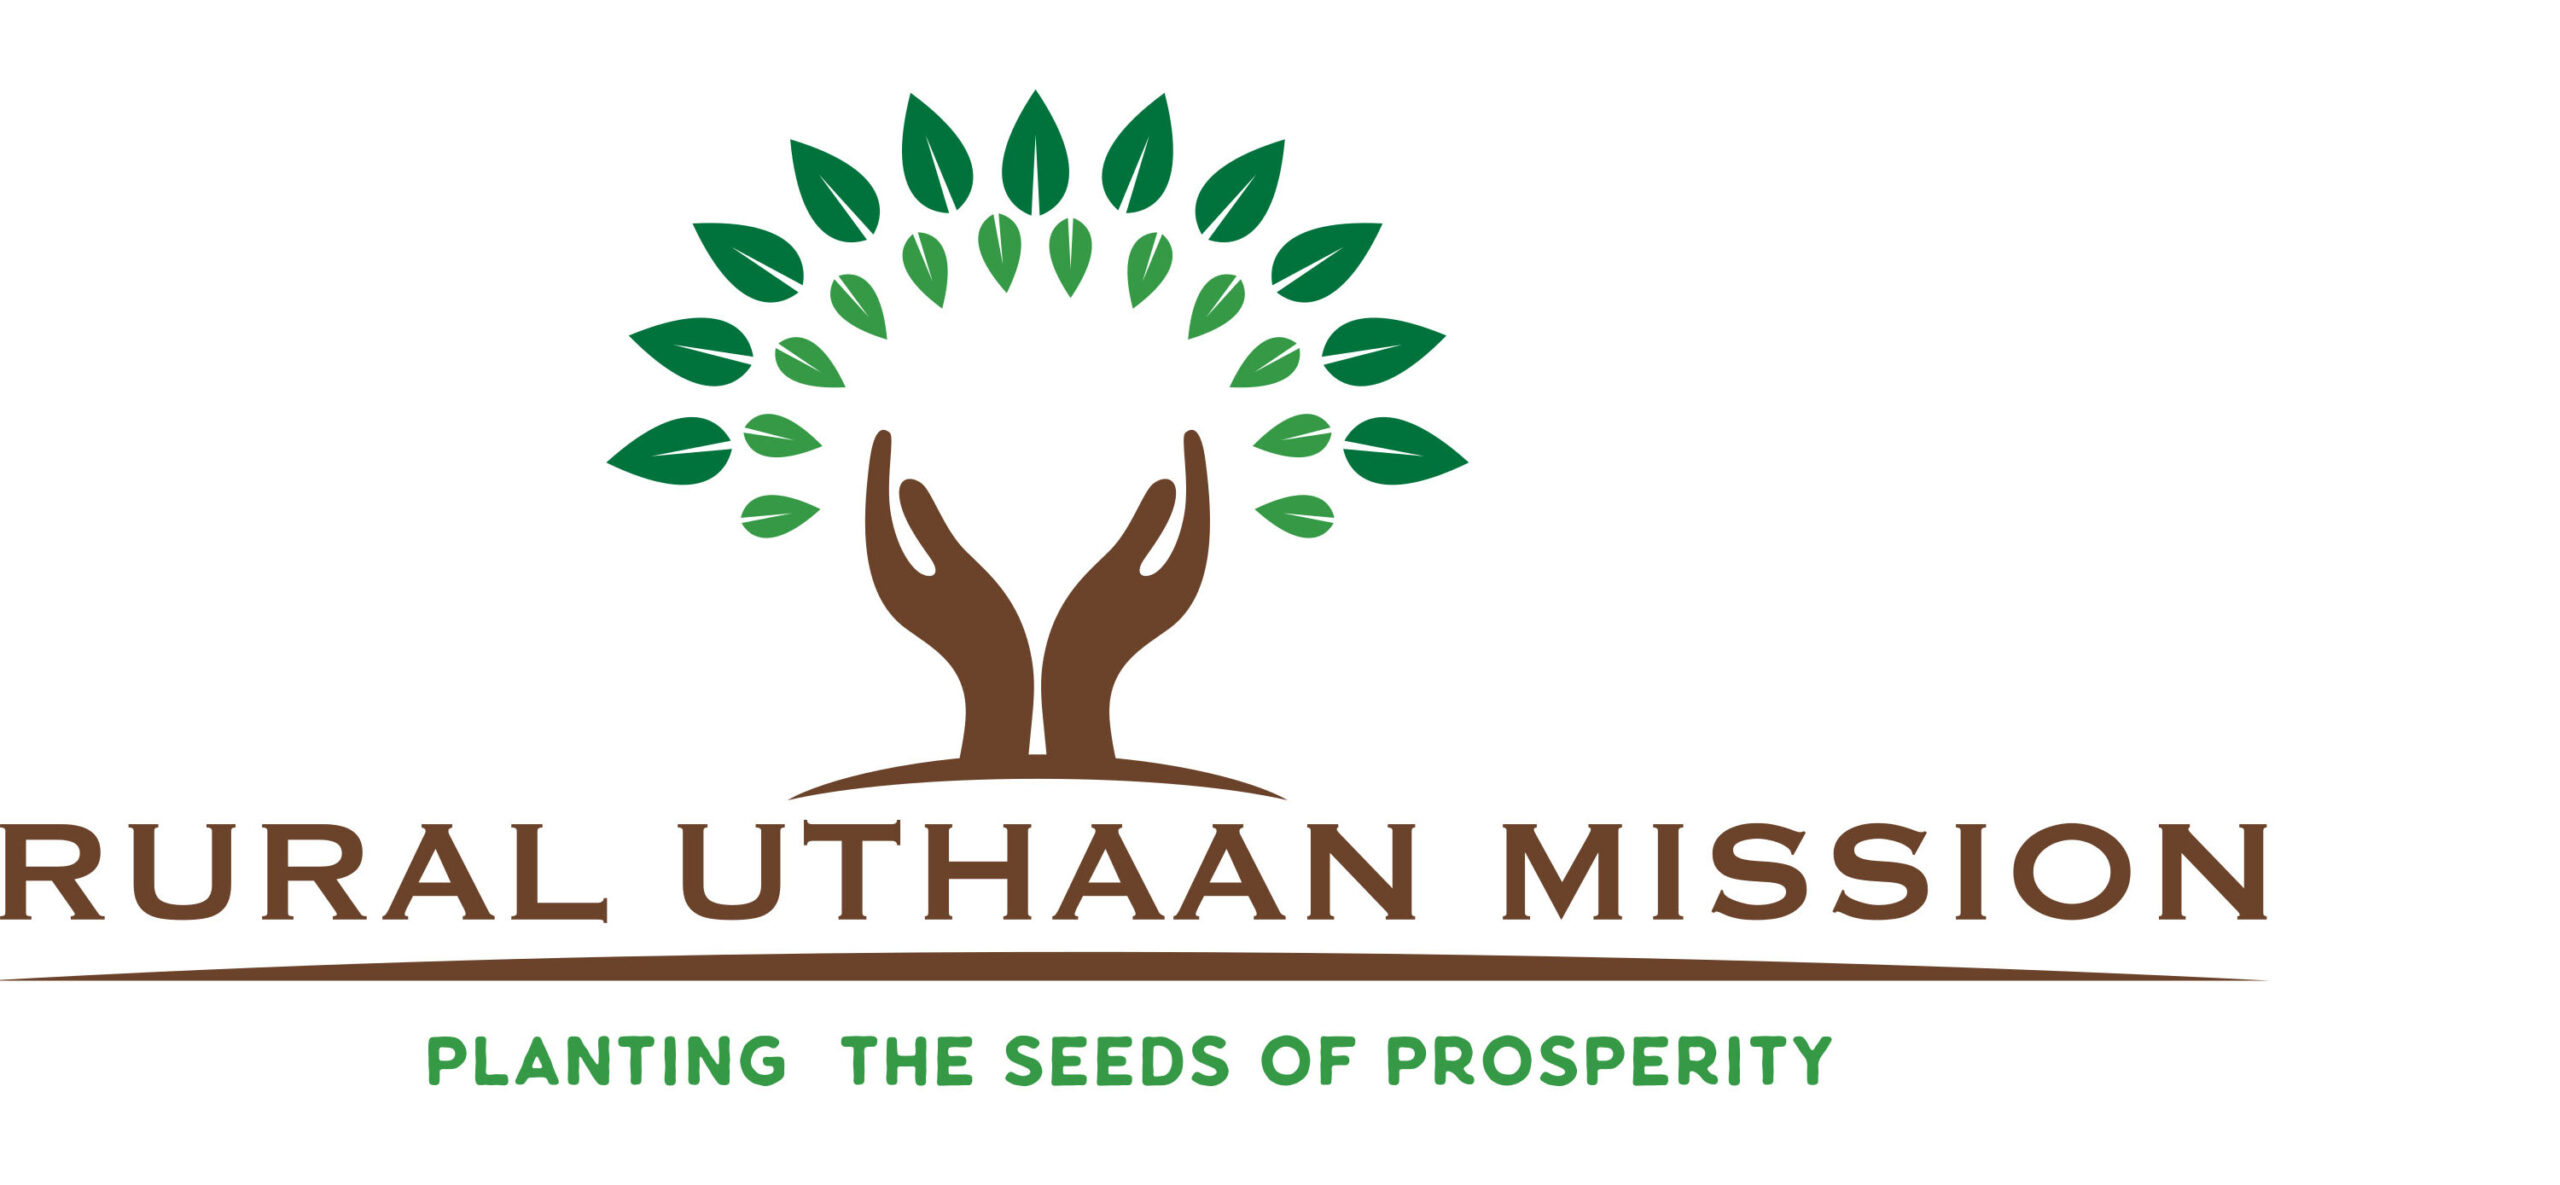 Rural Uthaan Mission